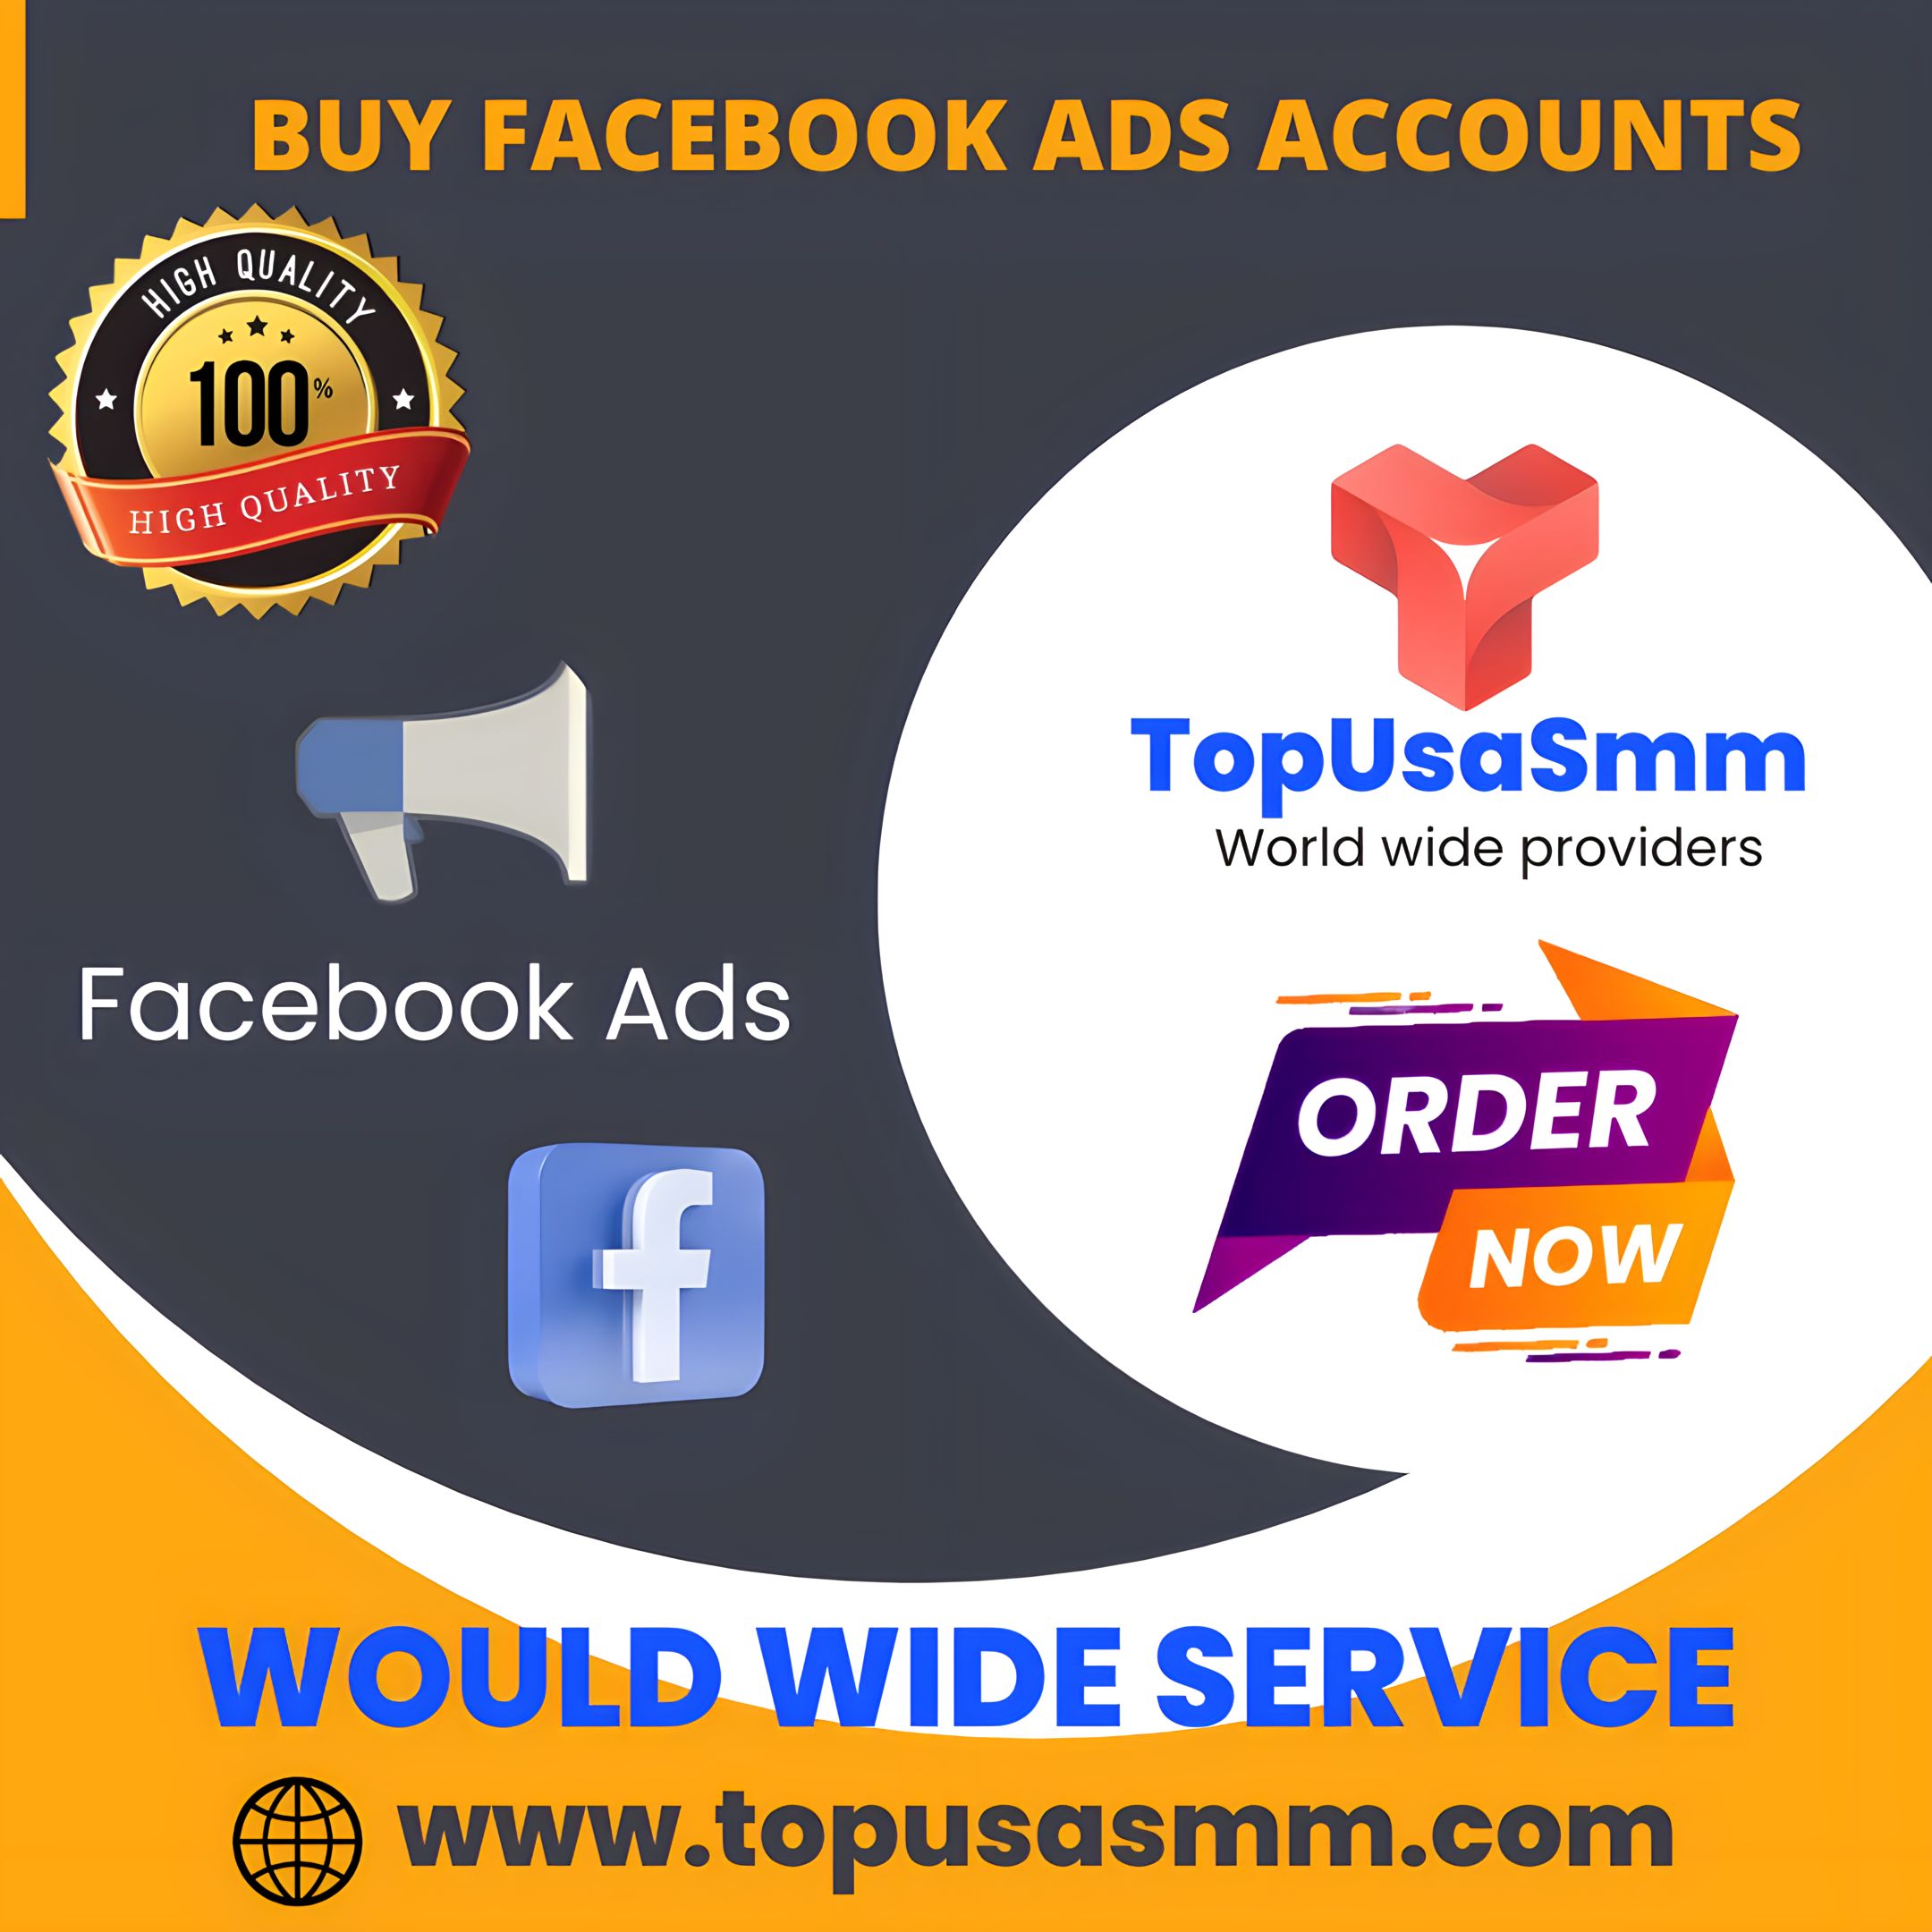 Buy Facebook Ads Accounts -